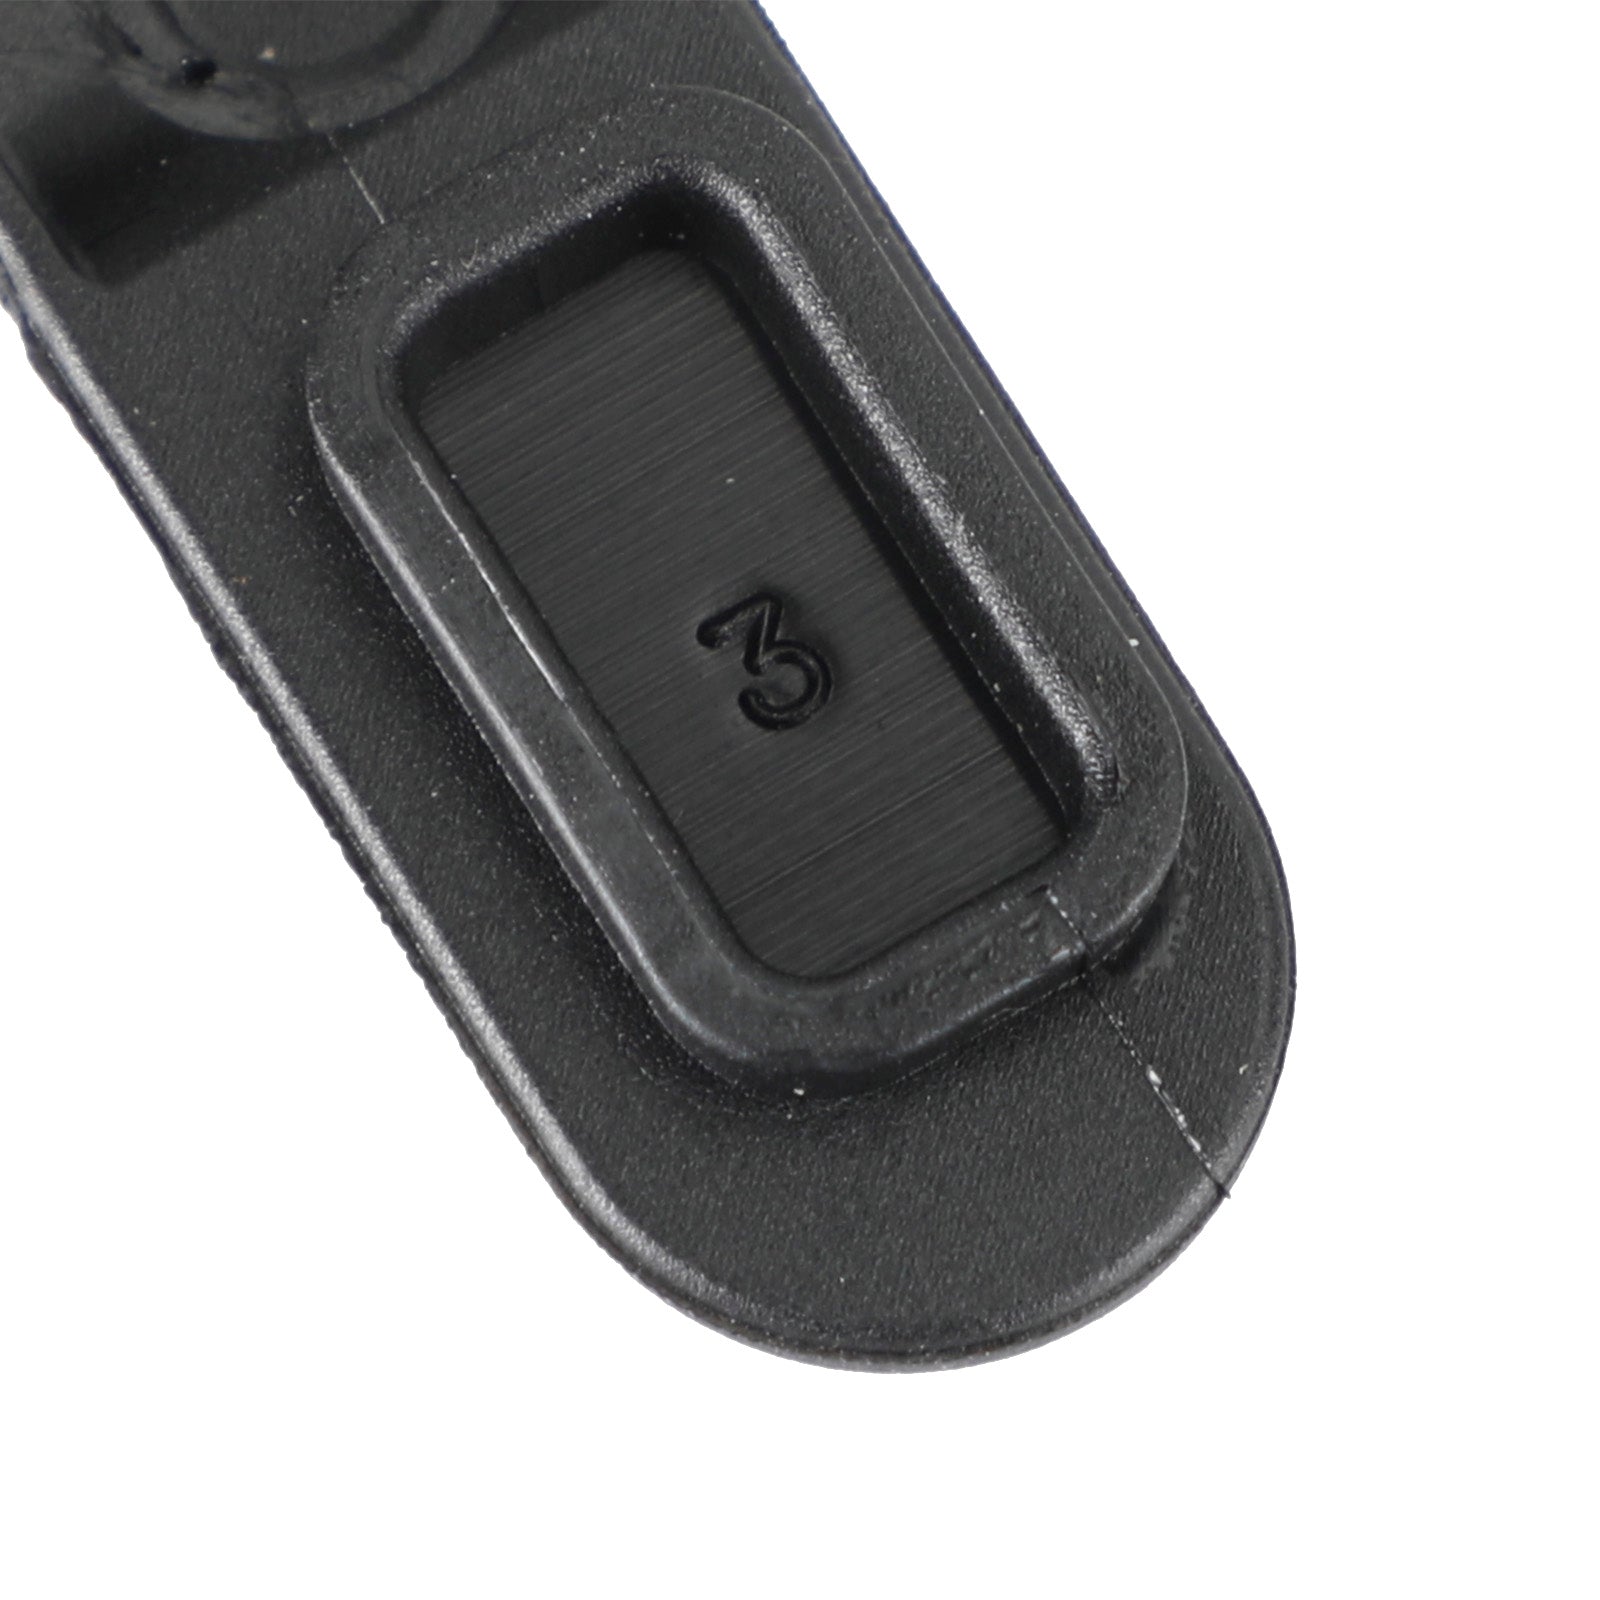 XIR P3688 DEP450 DP1400 CP200D Copertura antipolvere laterale per walkie talkie